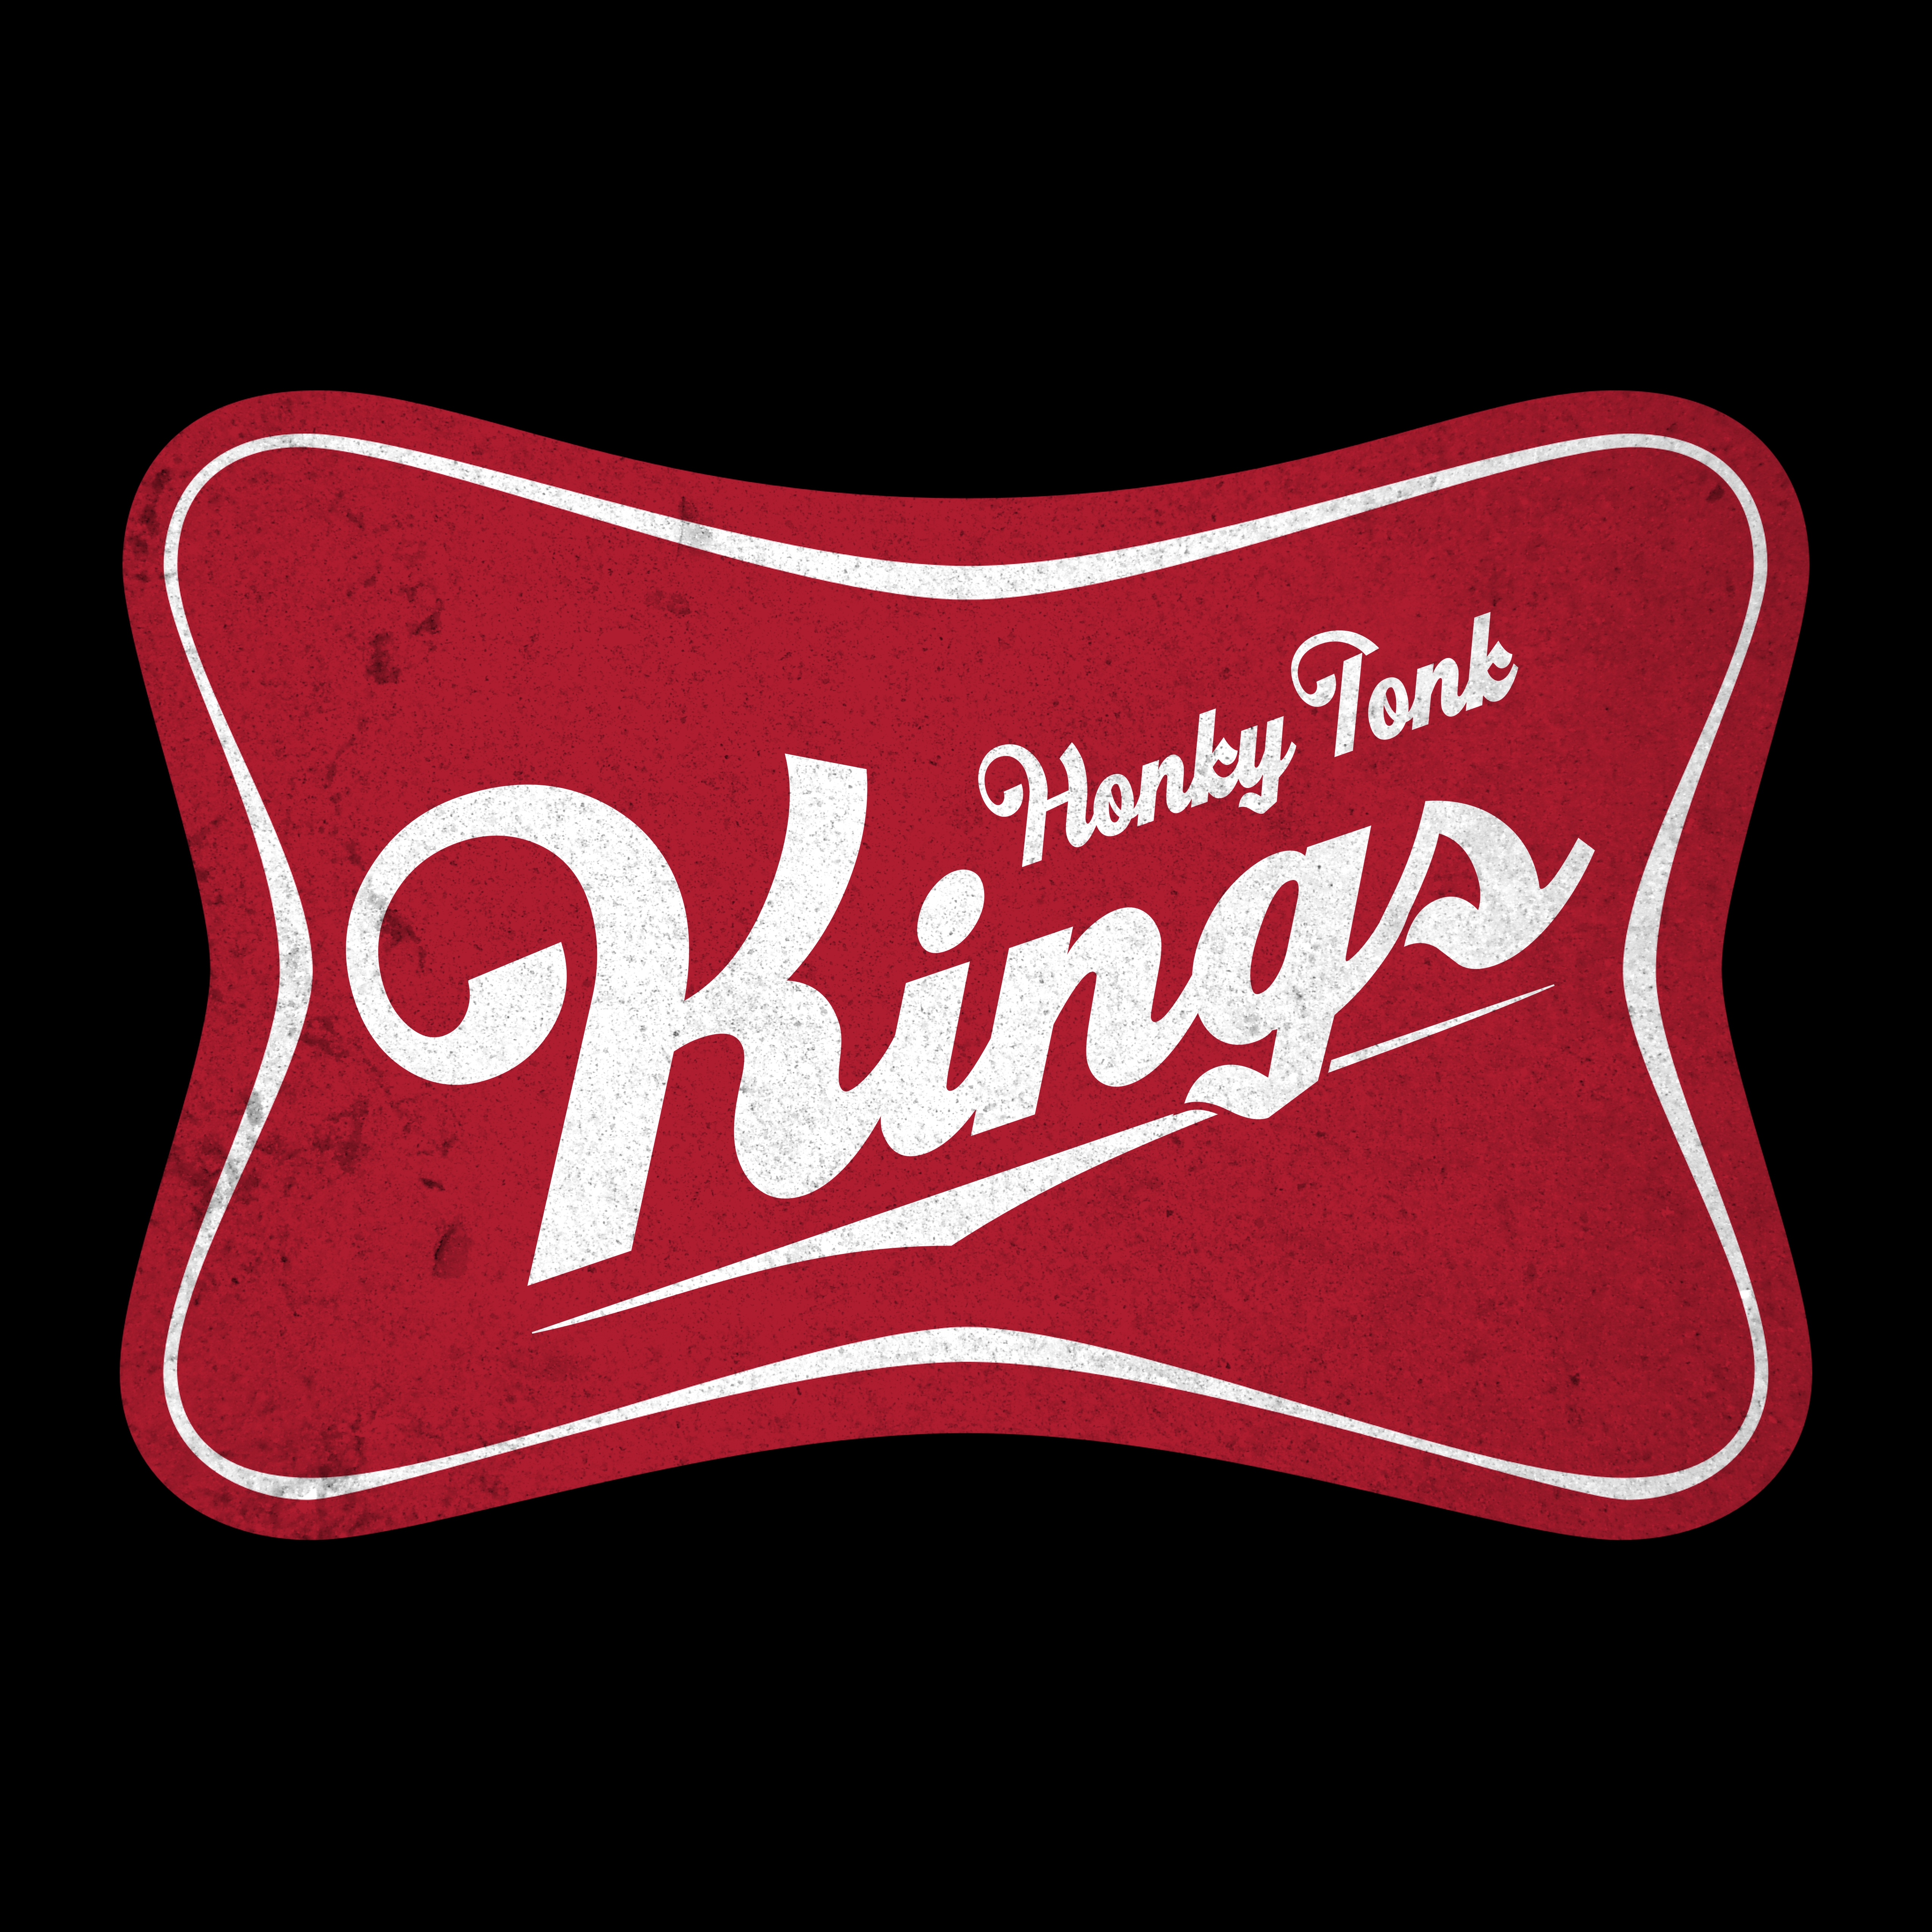 The HonkyTonk Kings